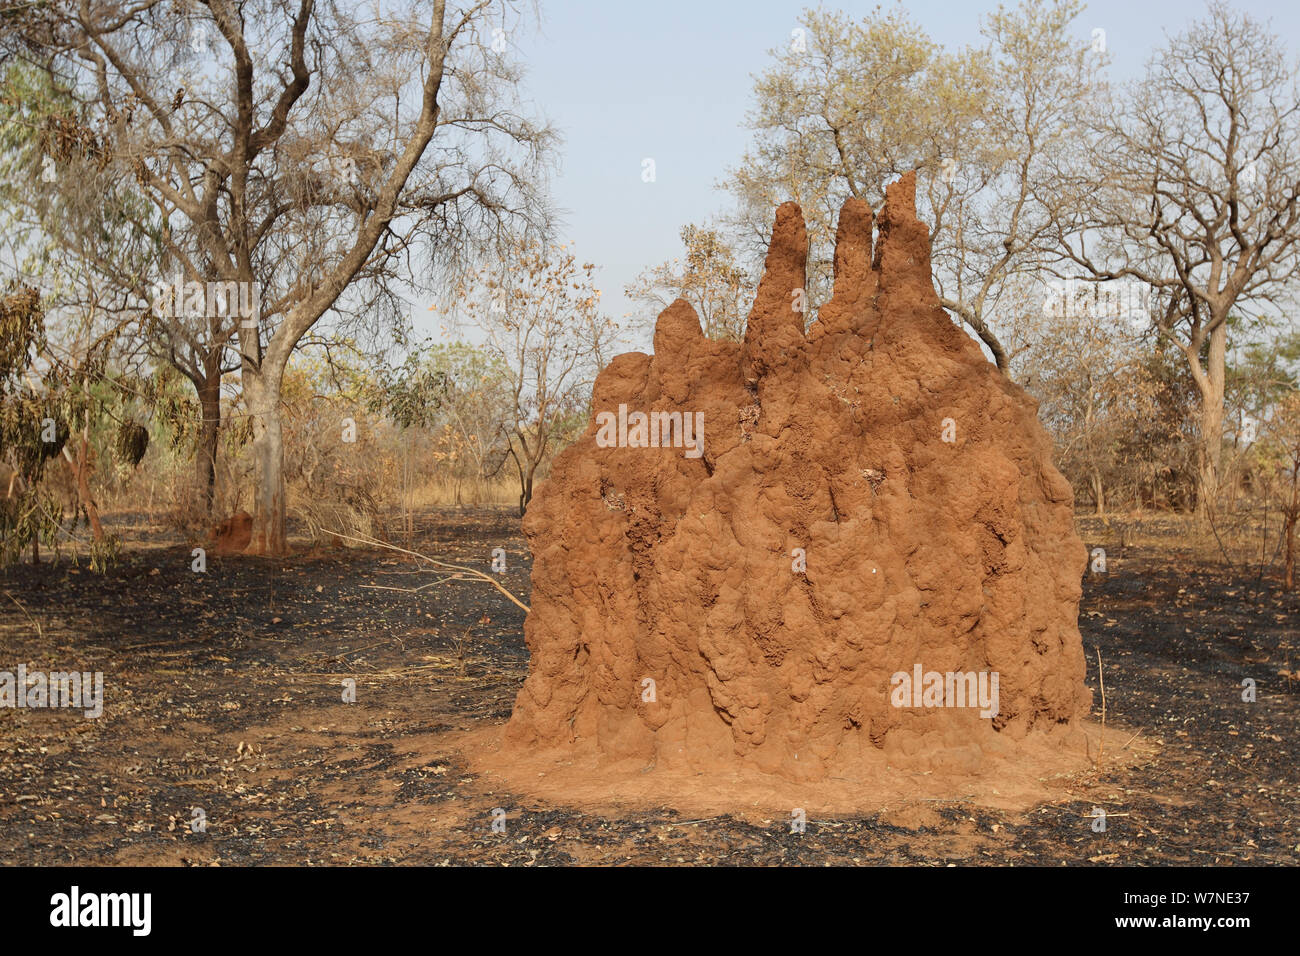 Termite mound (Isoptera) land burnt around it, Gambia Stock Photo